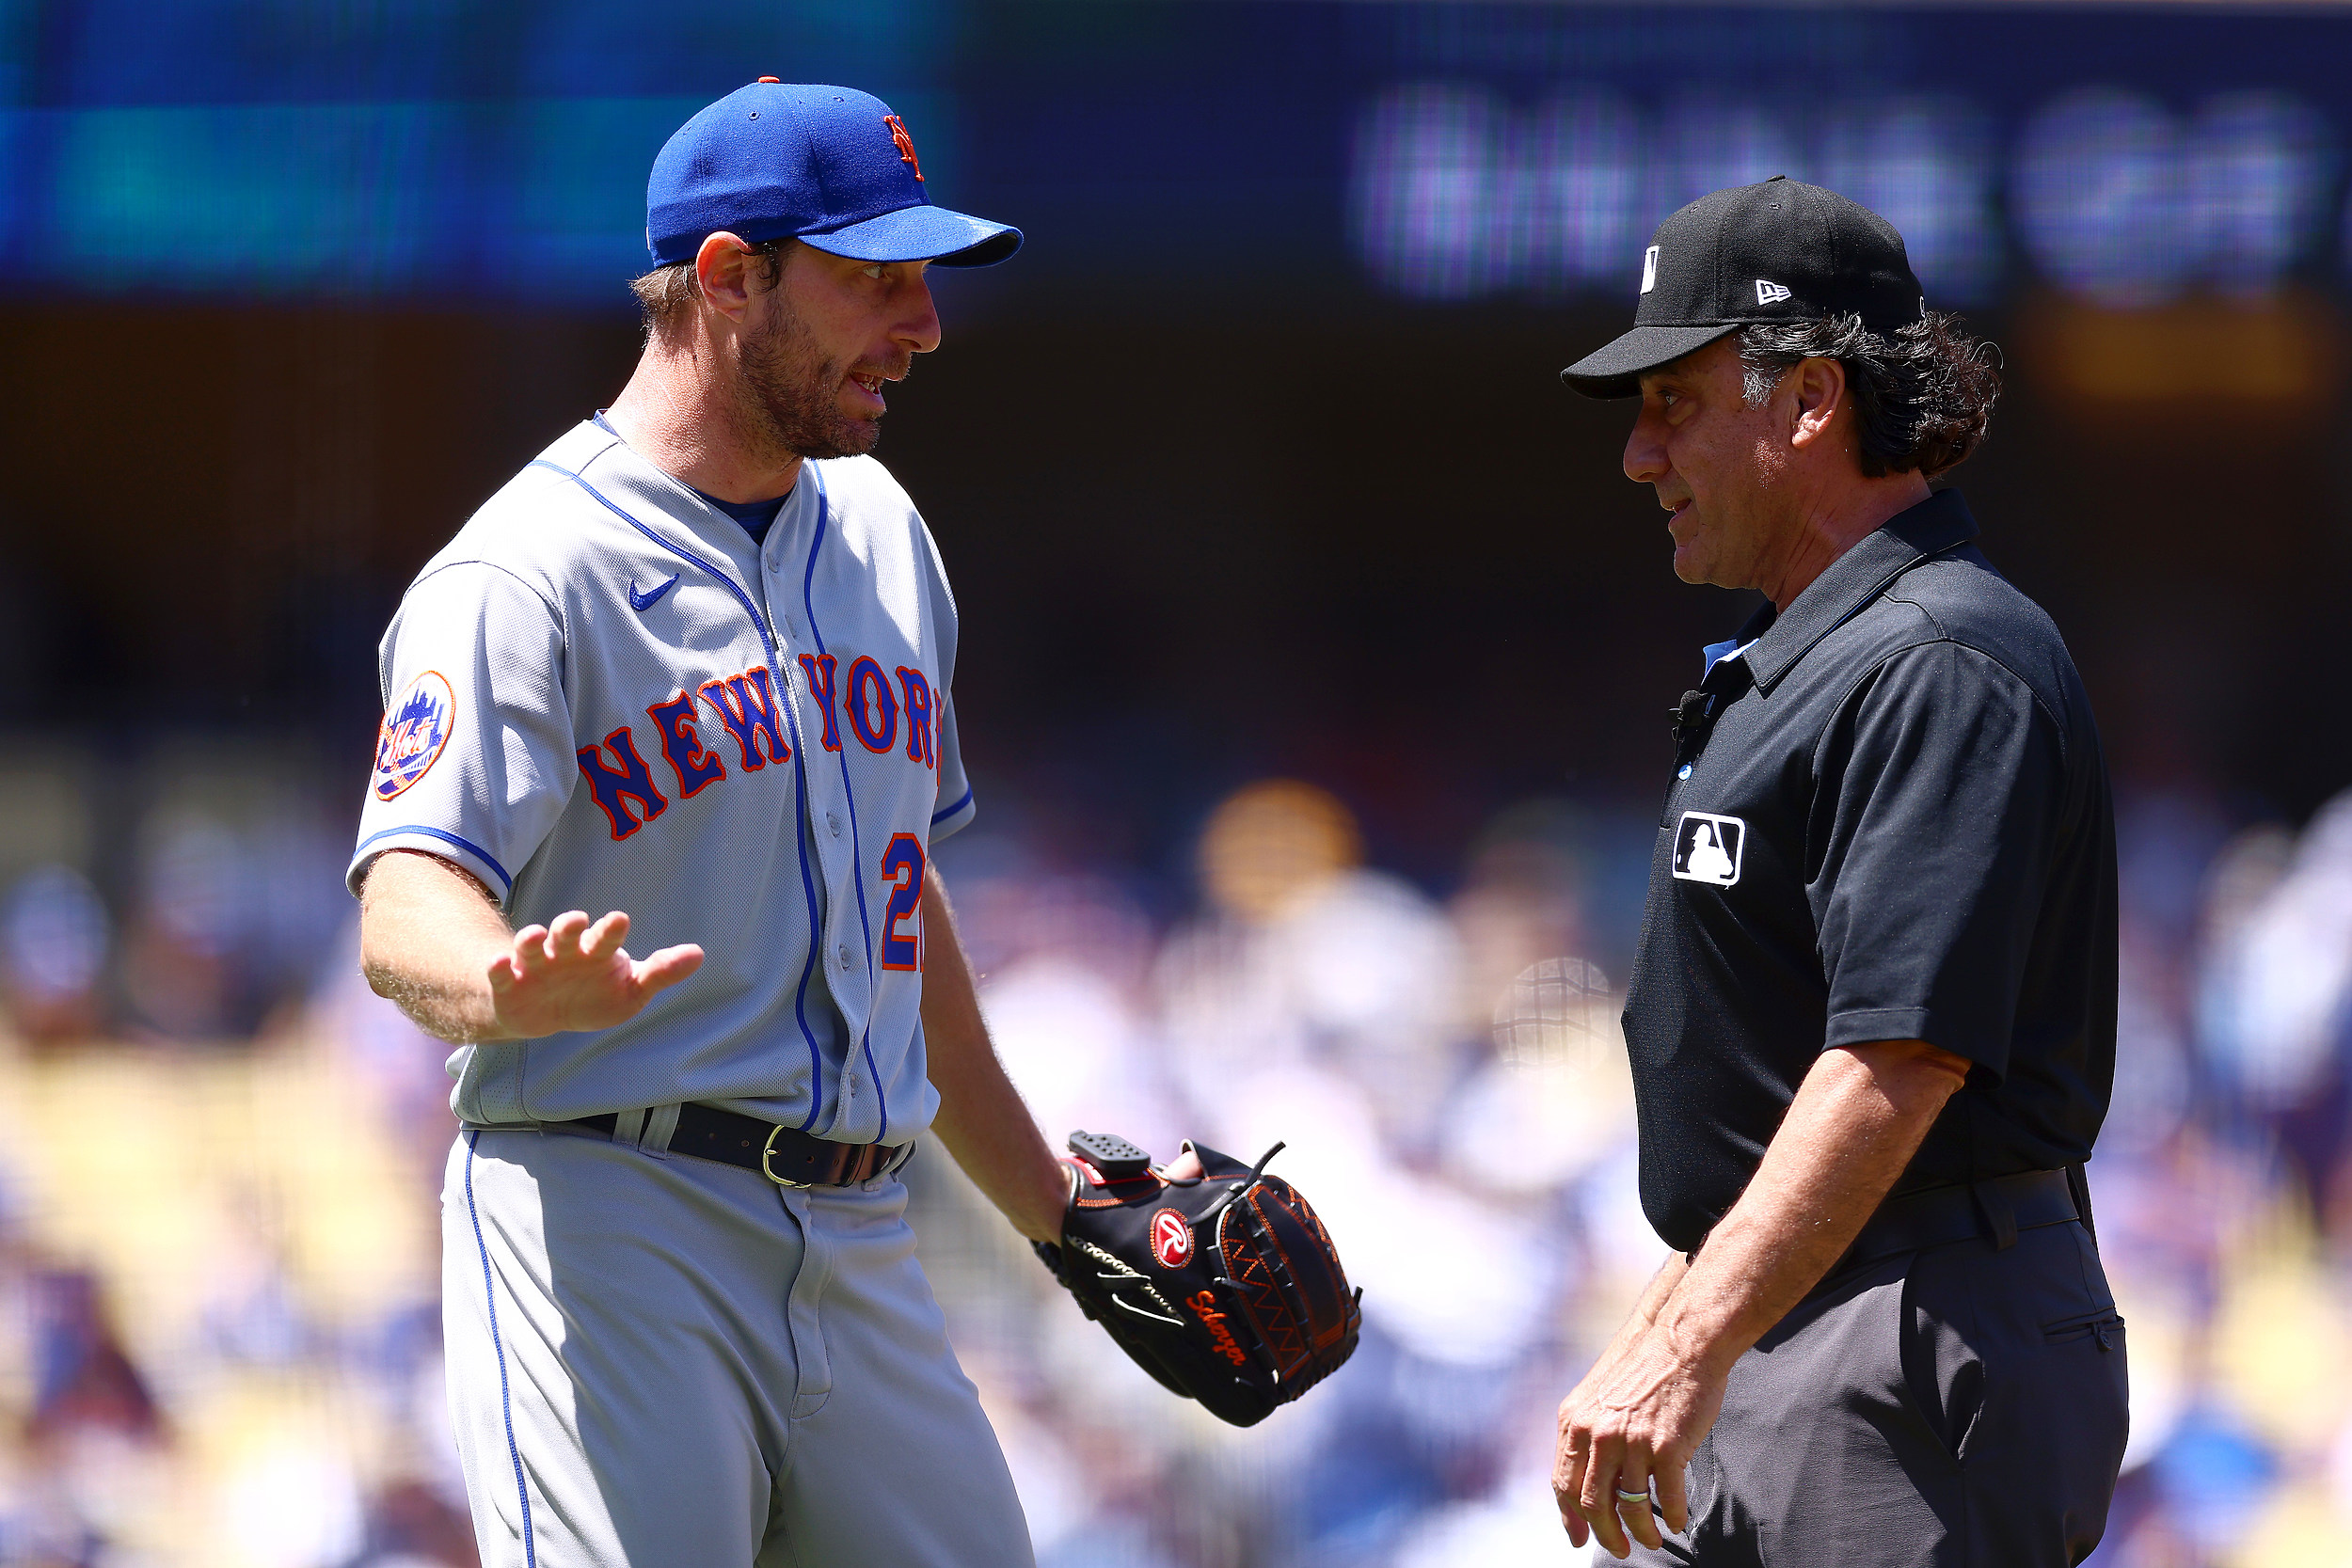 Explaining injury scare for Mets shortstop Javier Baez